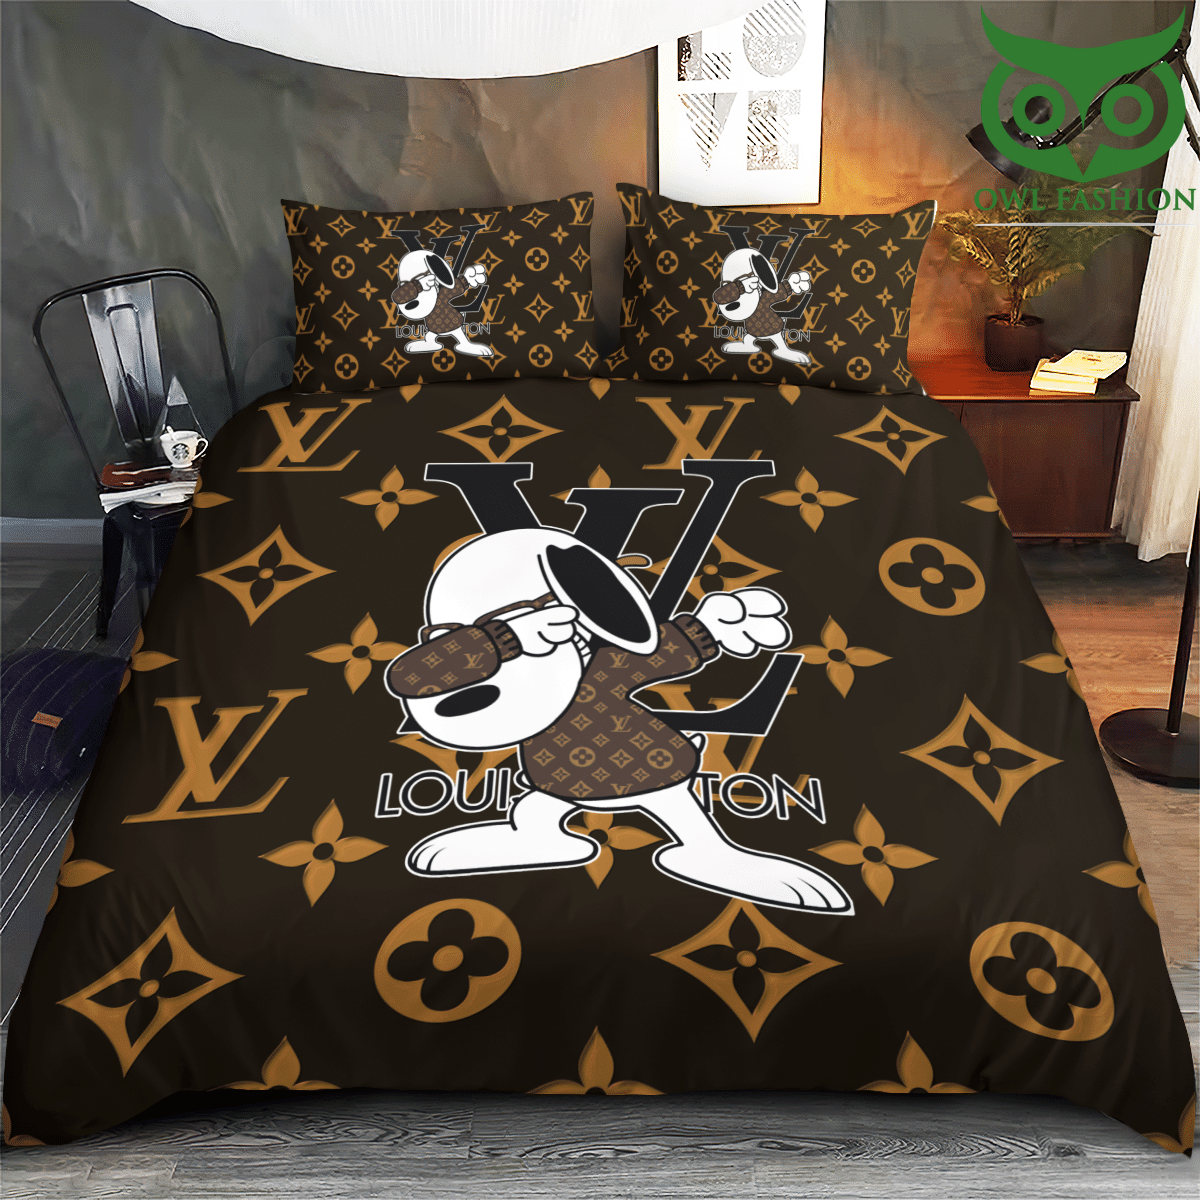 101 Louis Vuitton Snoopy dog Dabbing bedding set